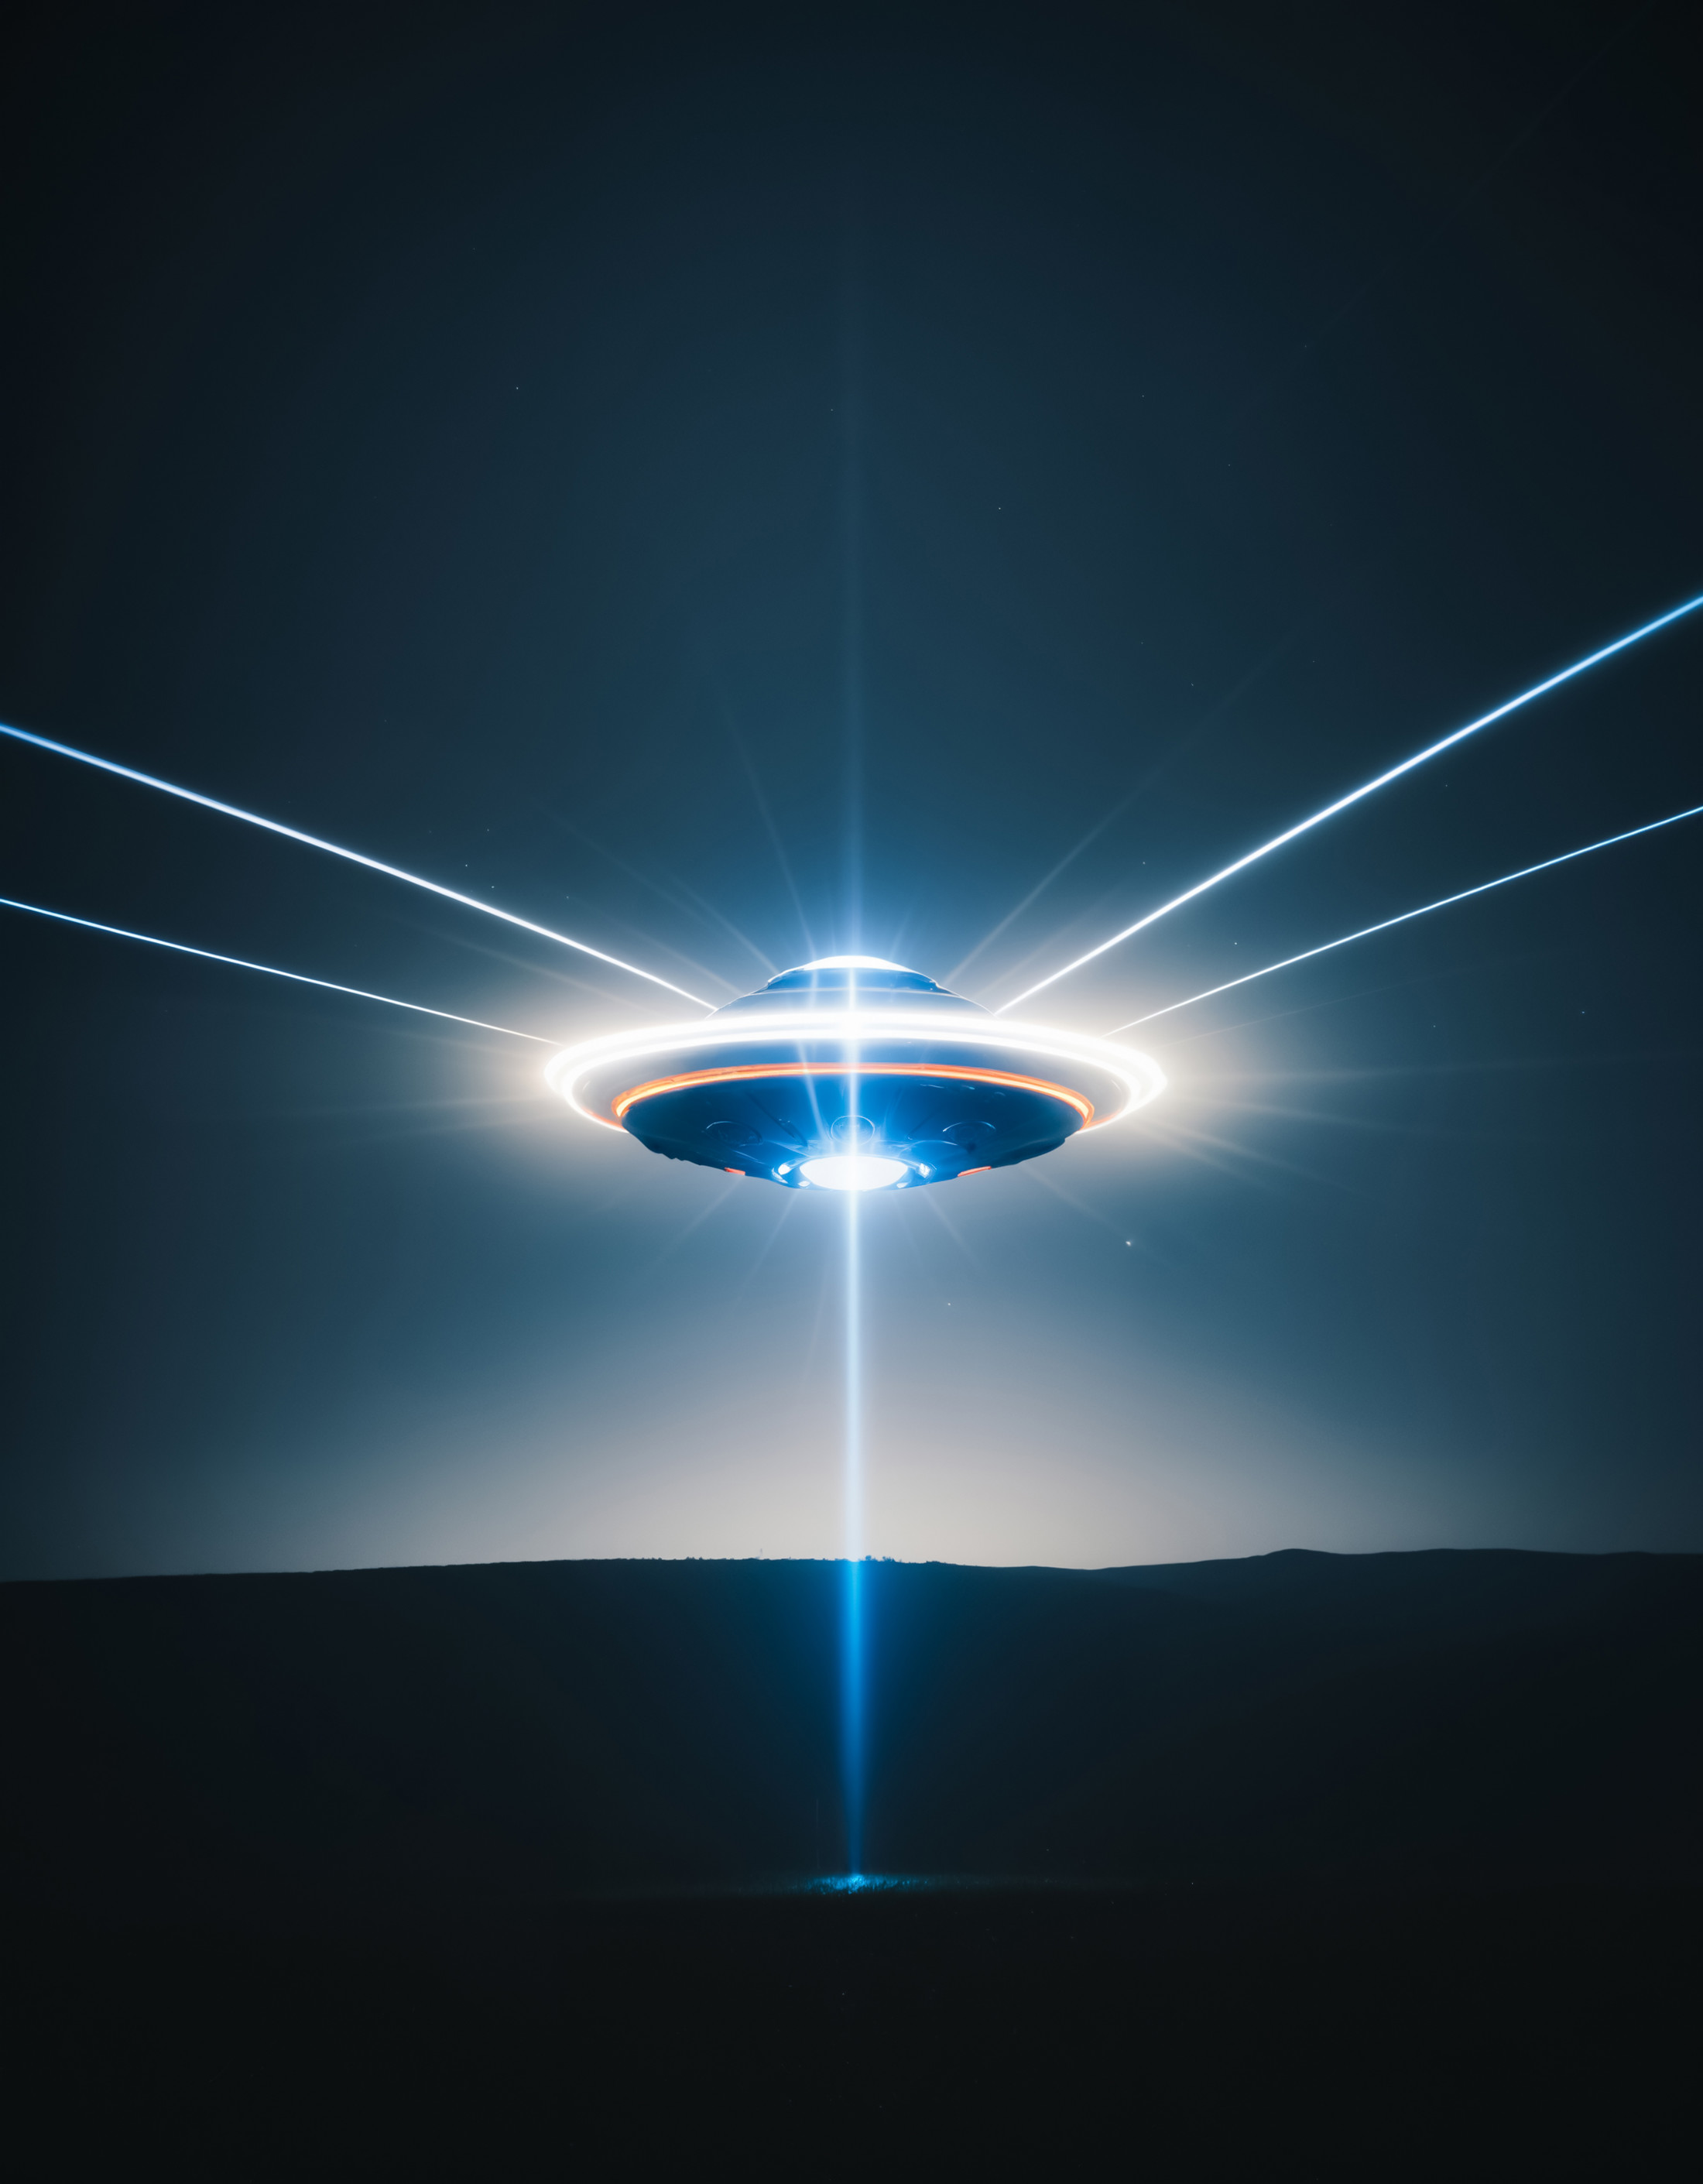 award winning photo of a ufo shooting lasers, zavy-lghttrl, atmospheric haze, dynamic angle, cinematic still, movie screen...